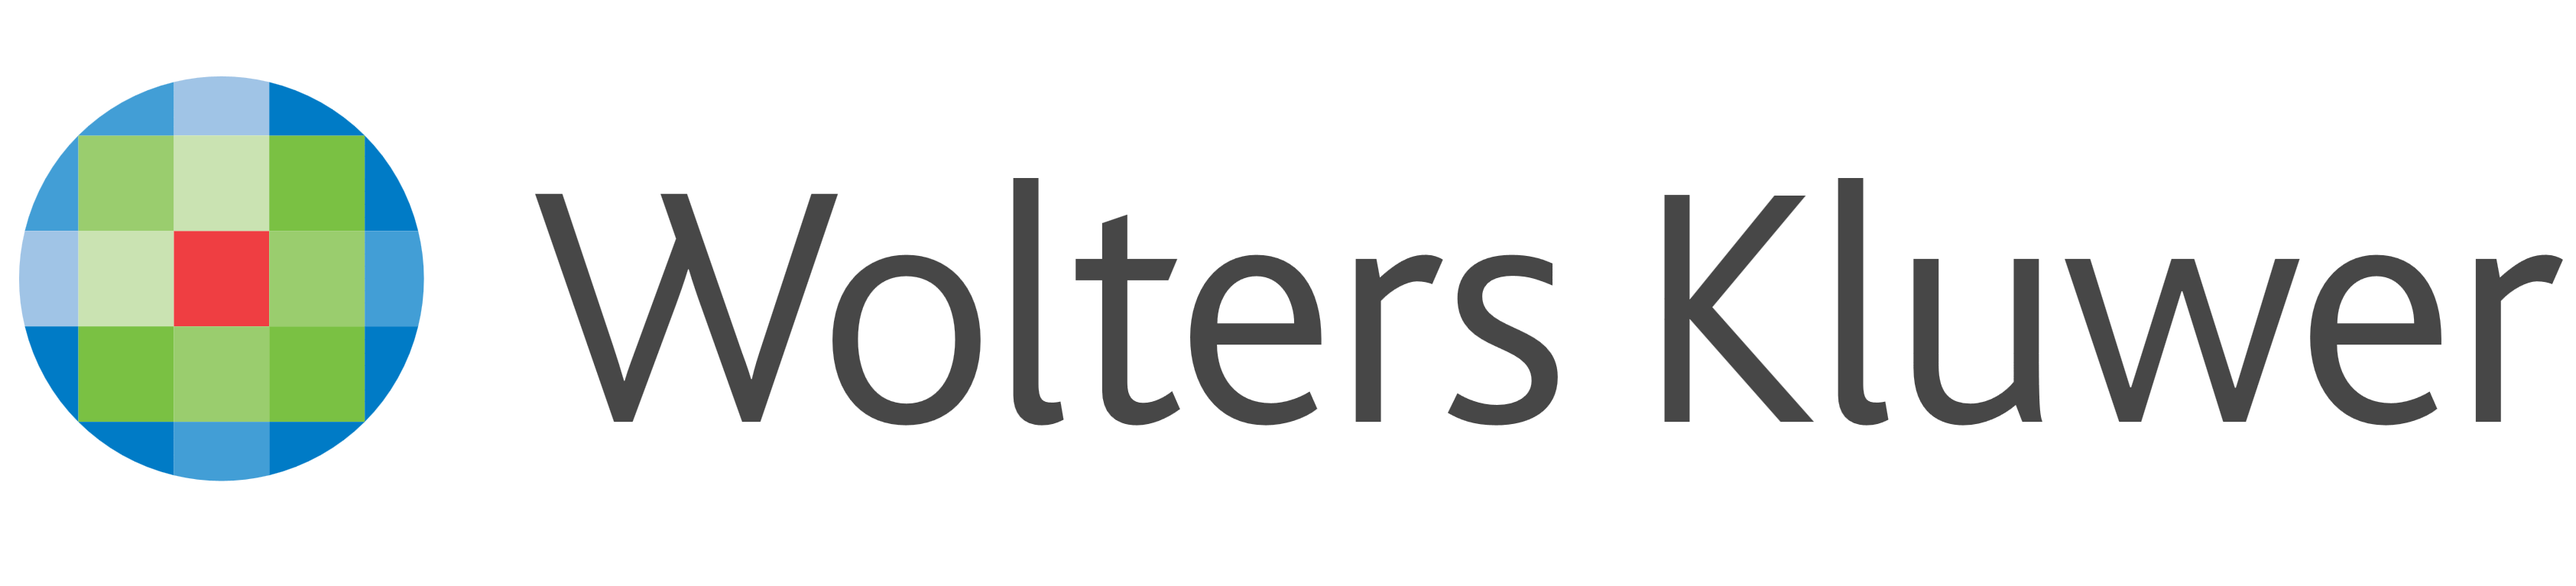 Wolters Kluwer logo, logotype